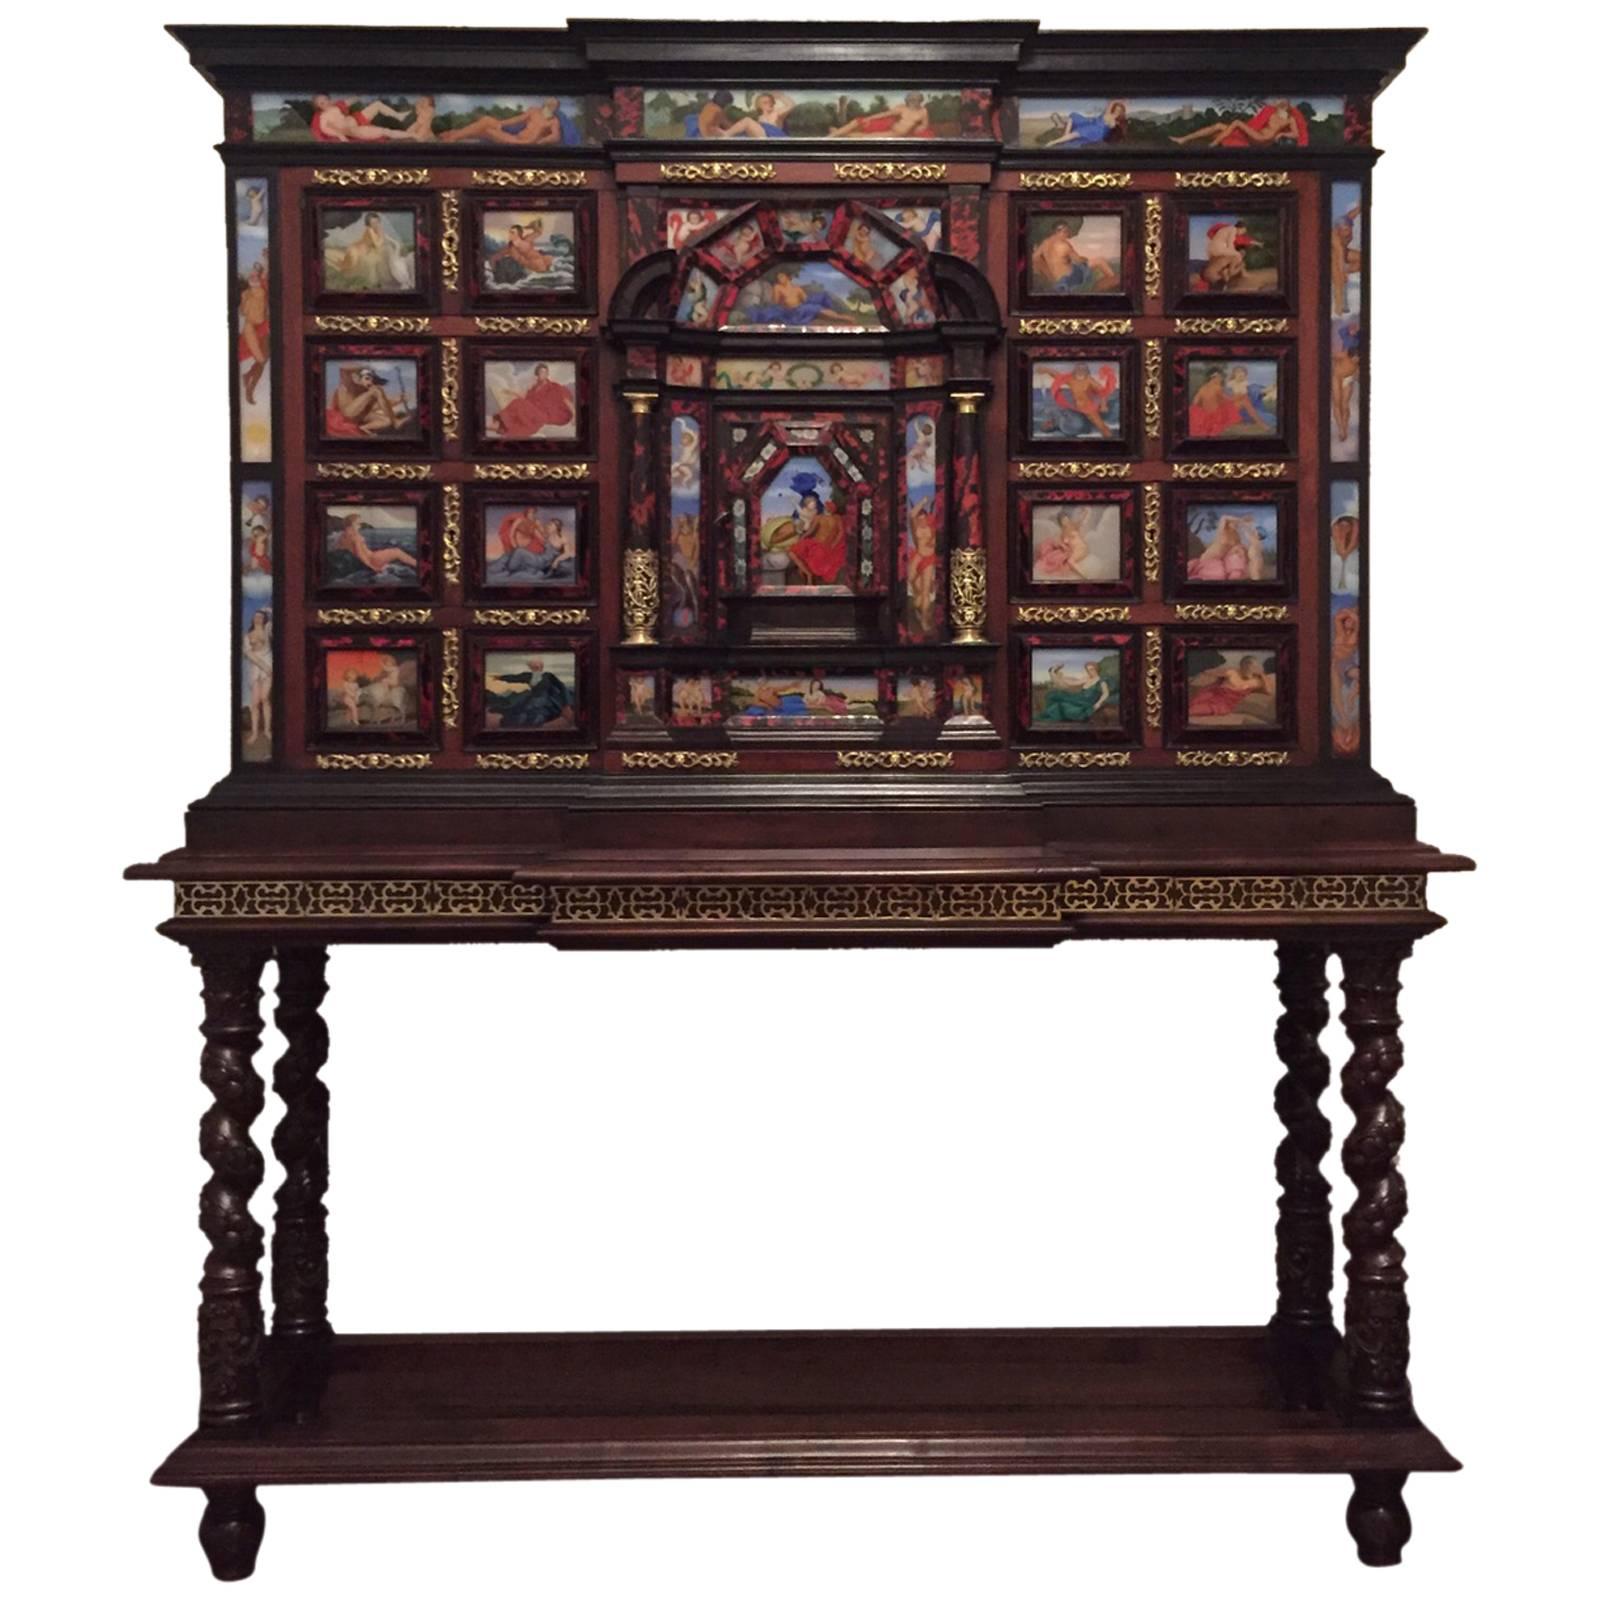 Original 18th Century Monumental Cabinet on Stand / Italian Bargueno / European